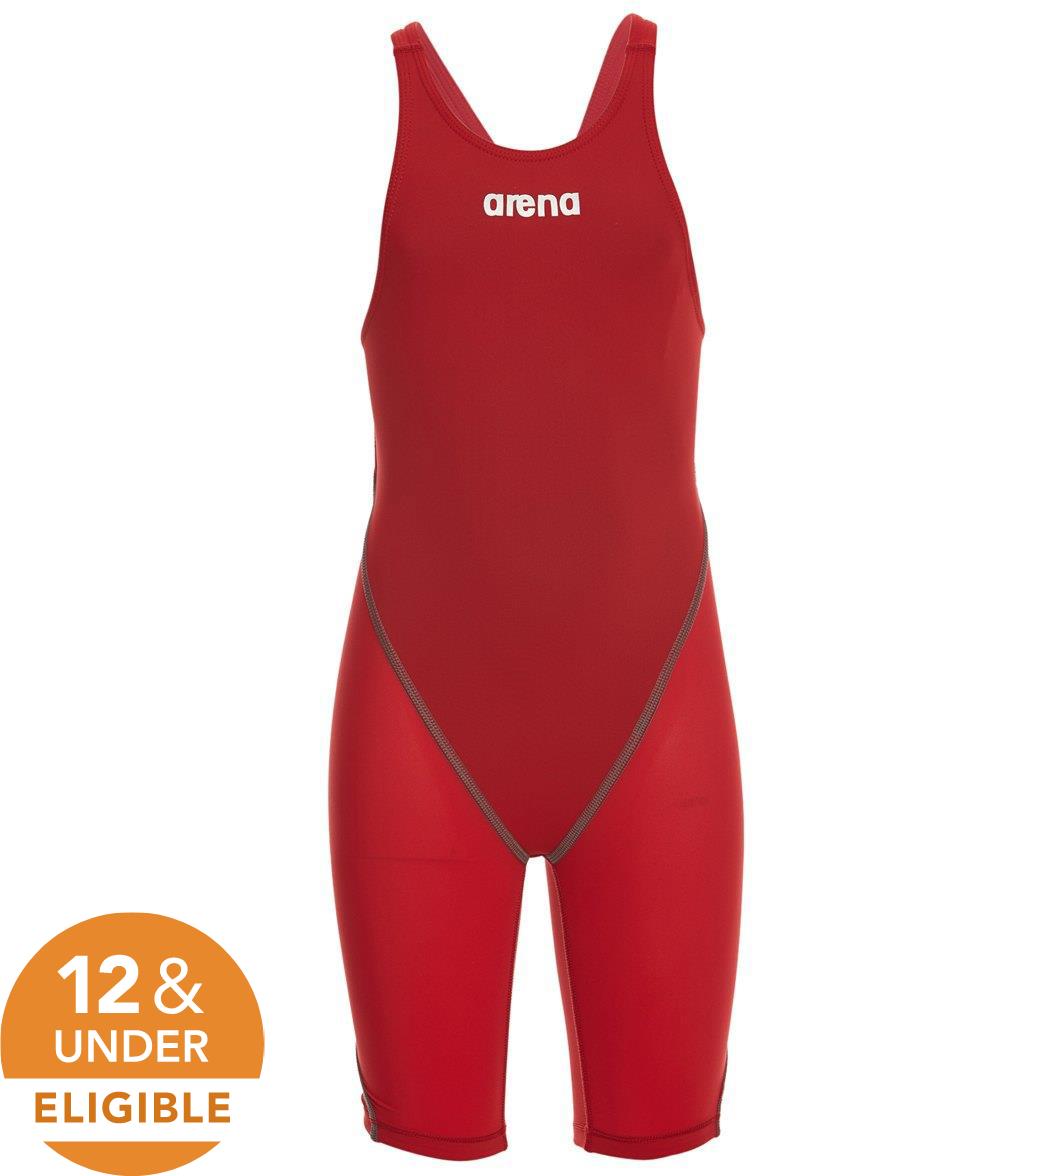 Arena Girls' Powerskin St 2.0 Open Back Tech Suit Swimsuit - Red 22 Polyamide/Elastane - Swimoutlet.com